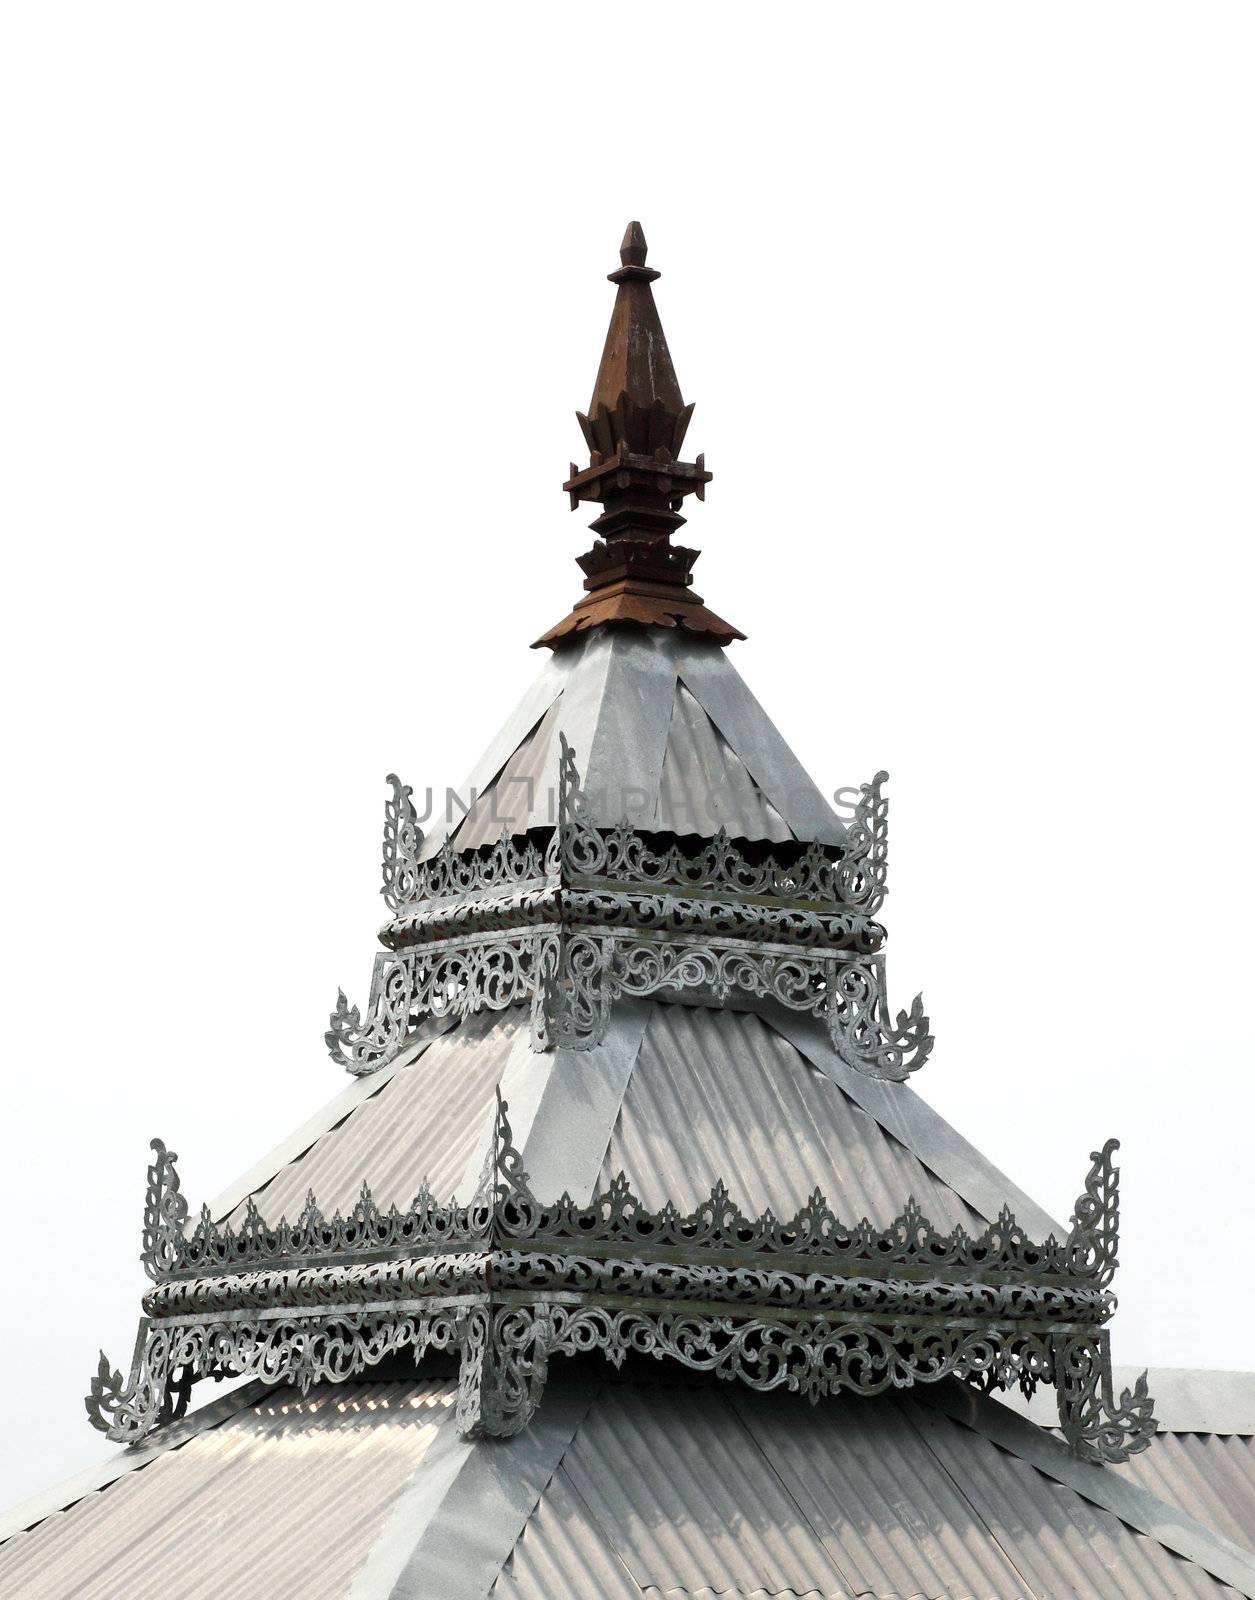 Thai roof texture